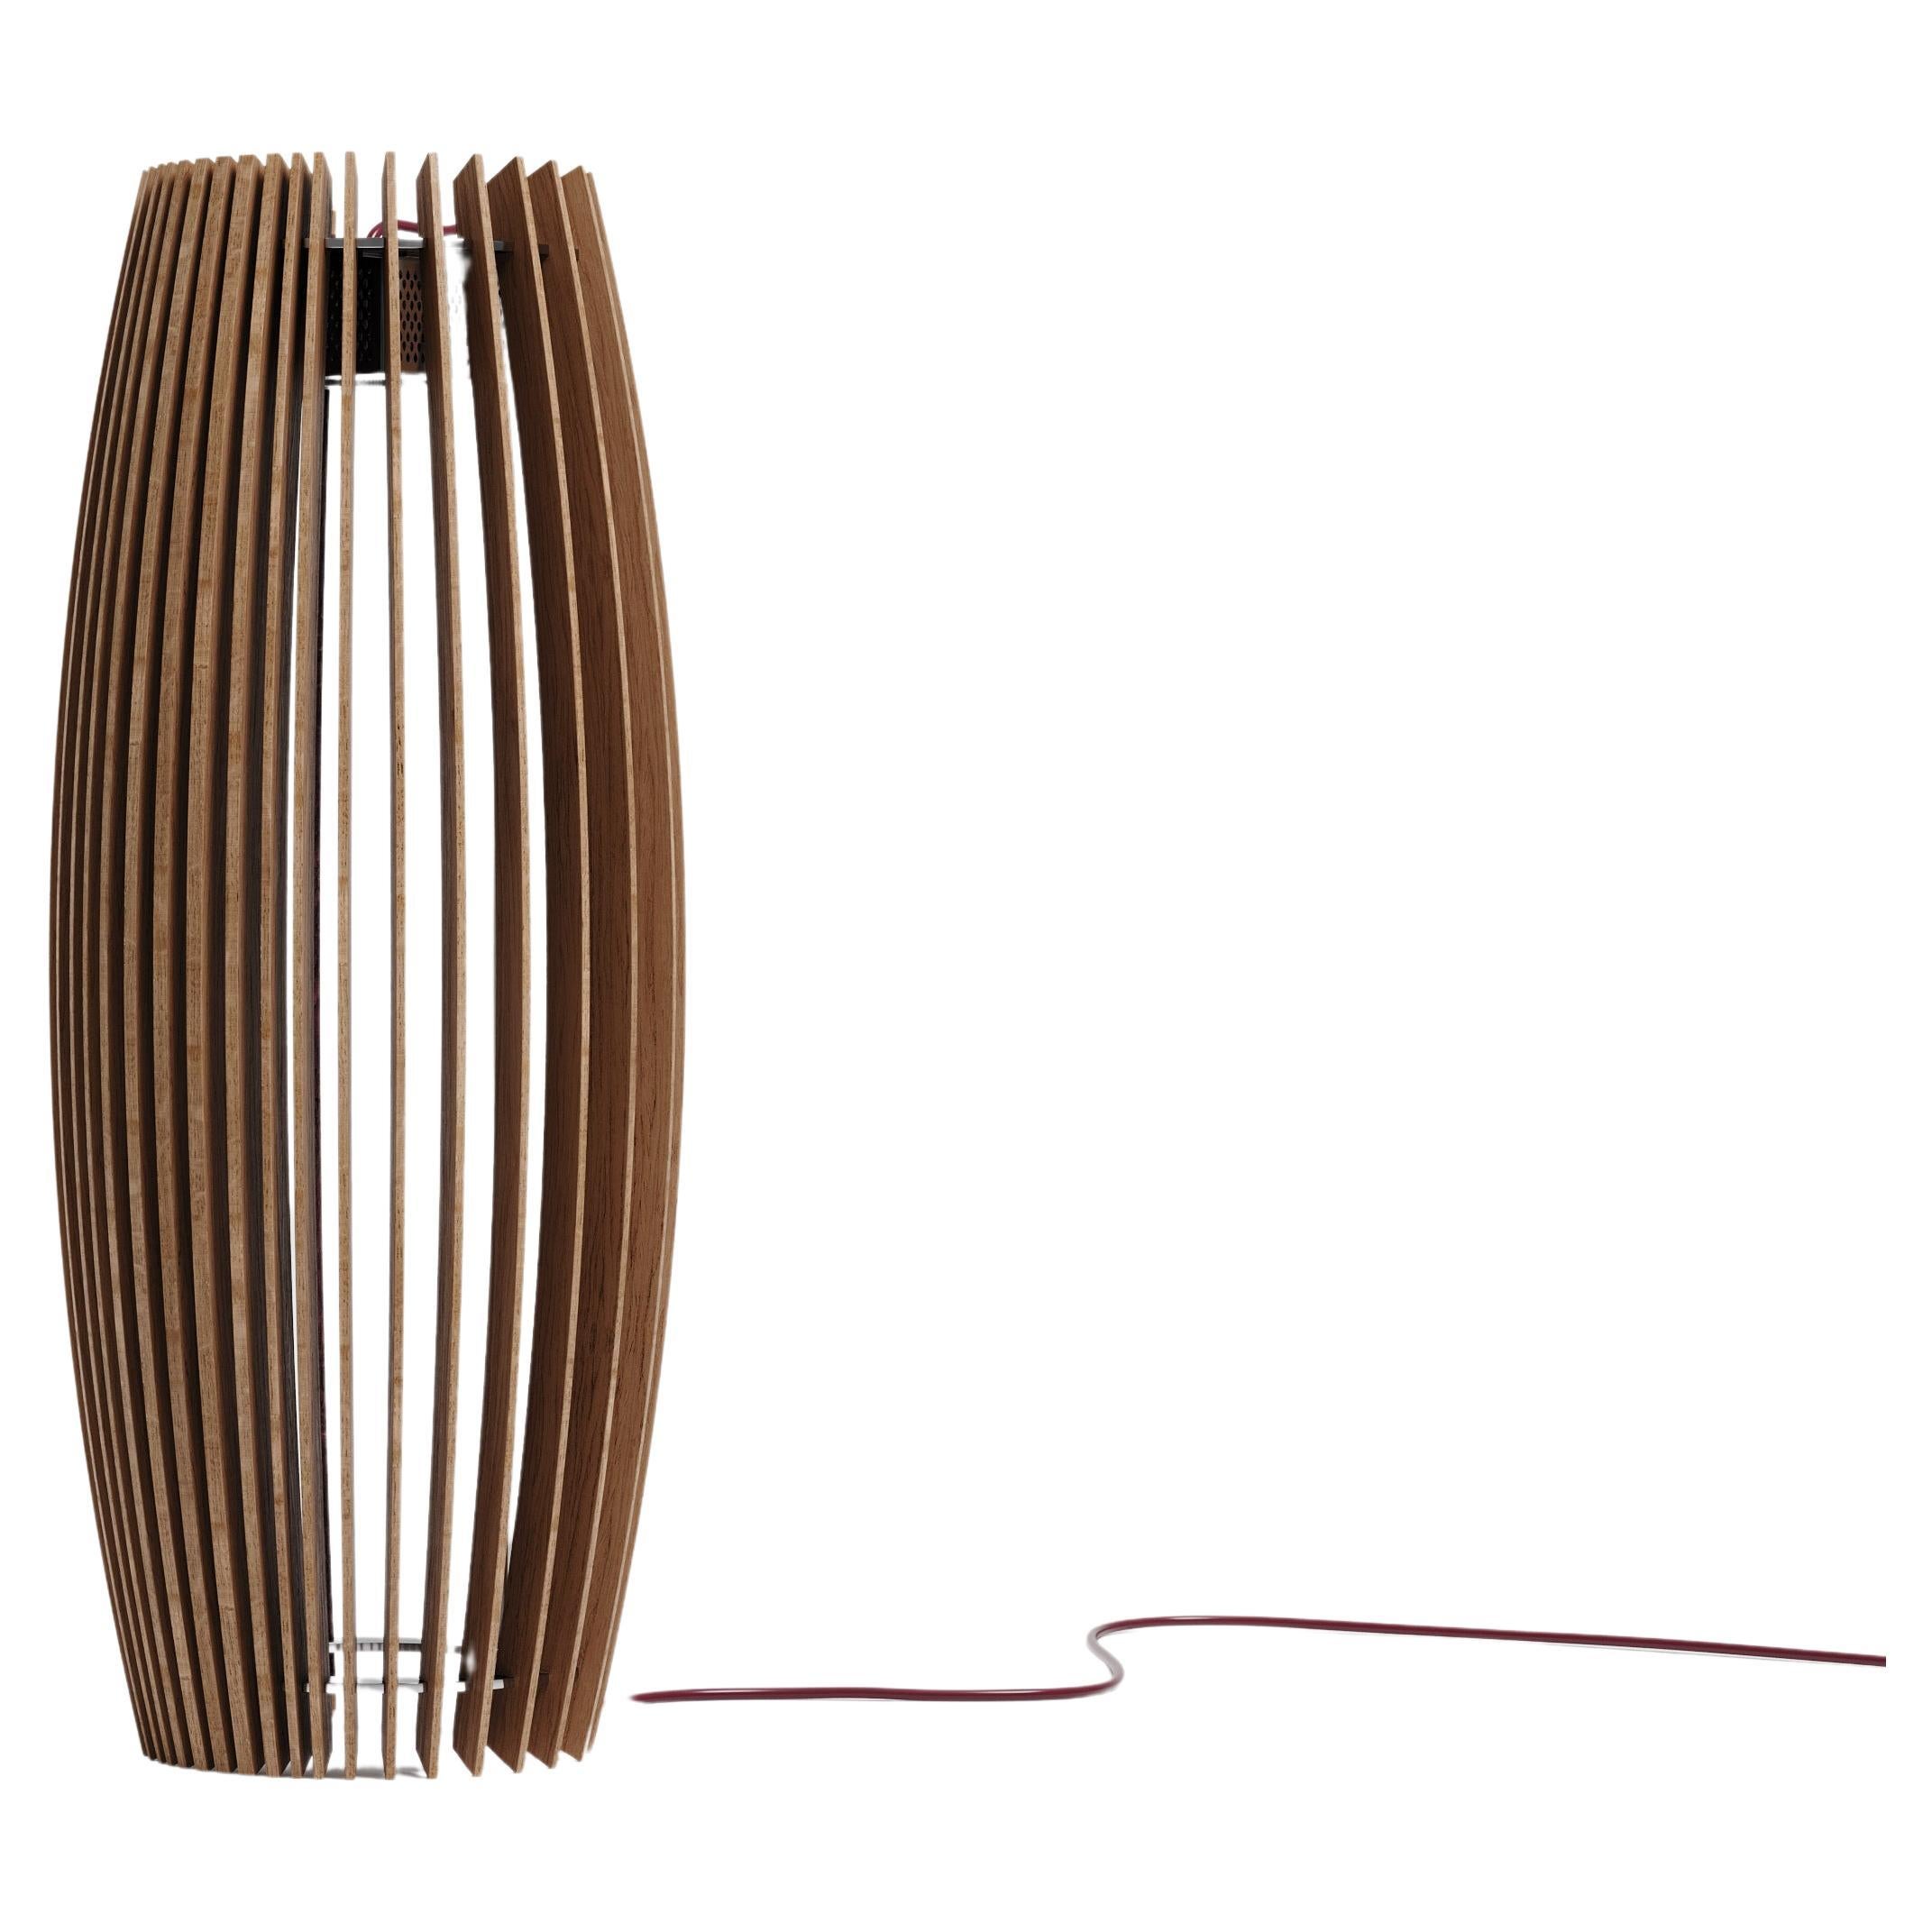 Ibla floor lamp by Winetage handmade in Italy